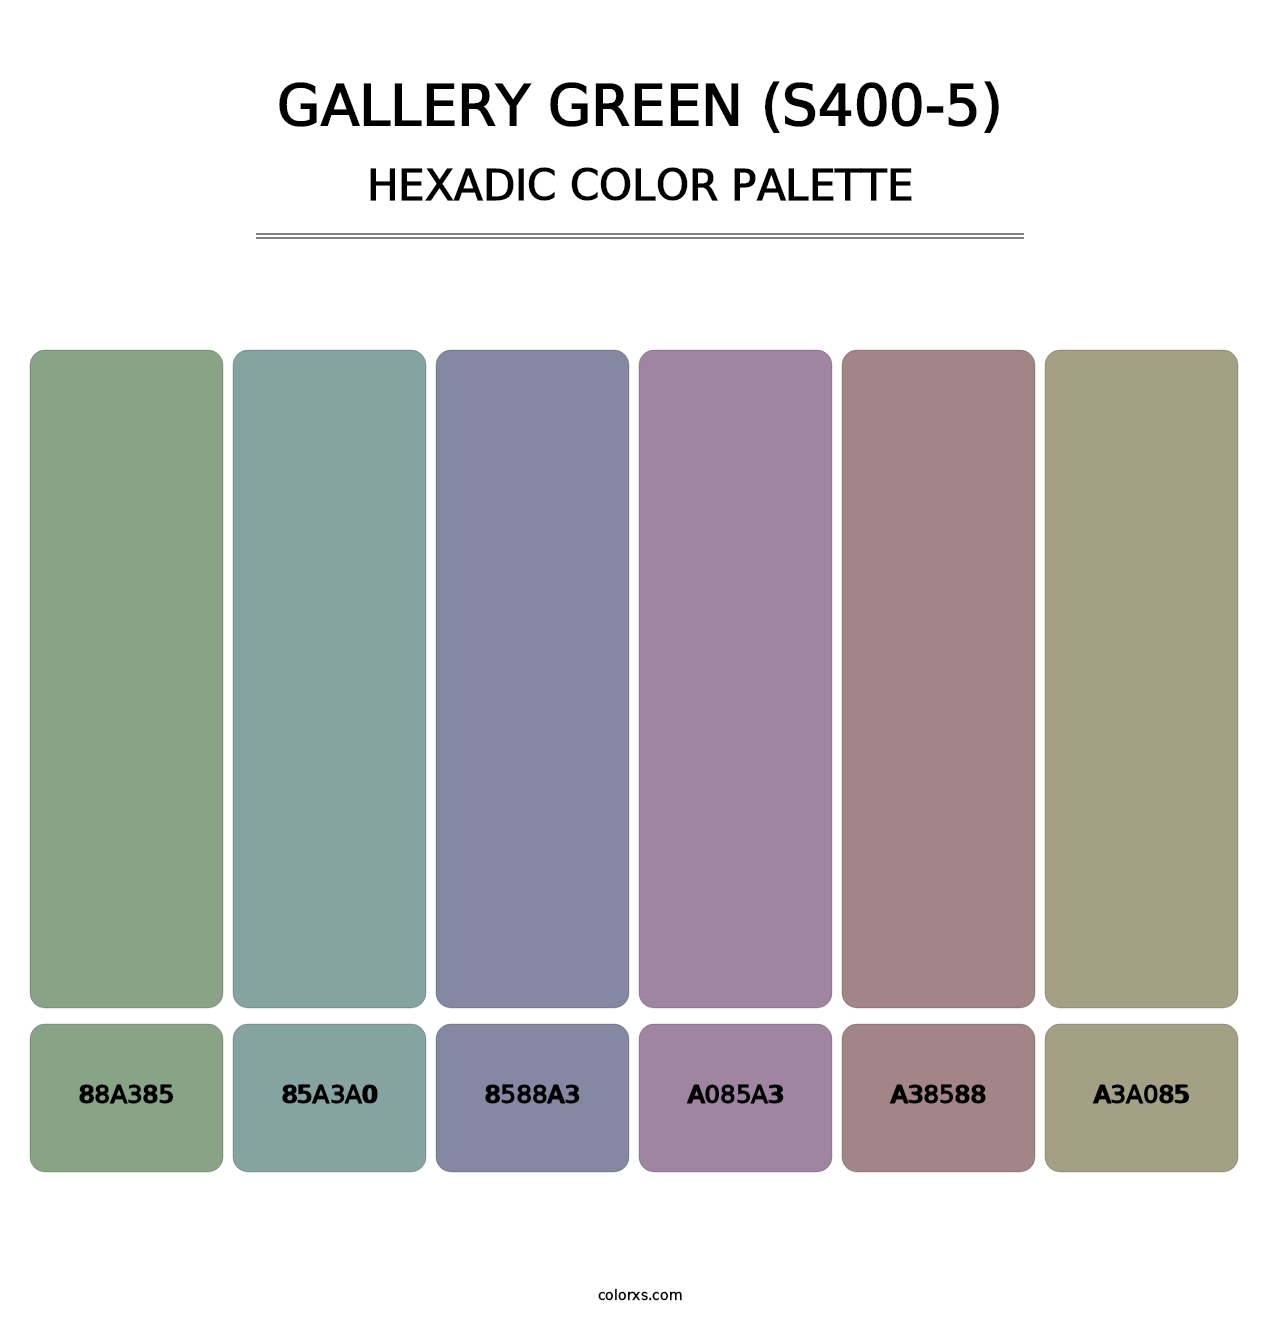 Gallery Green (S400-5) - Hexadic Color Palette